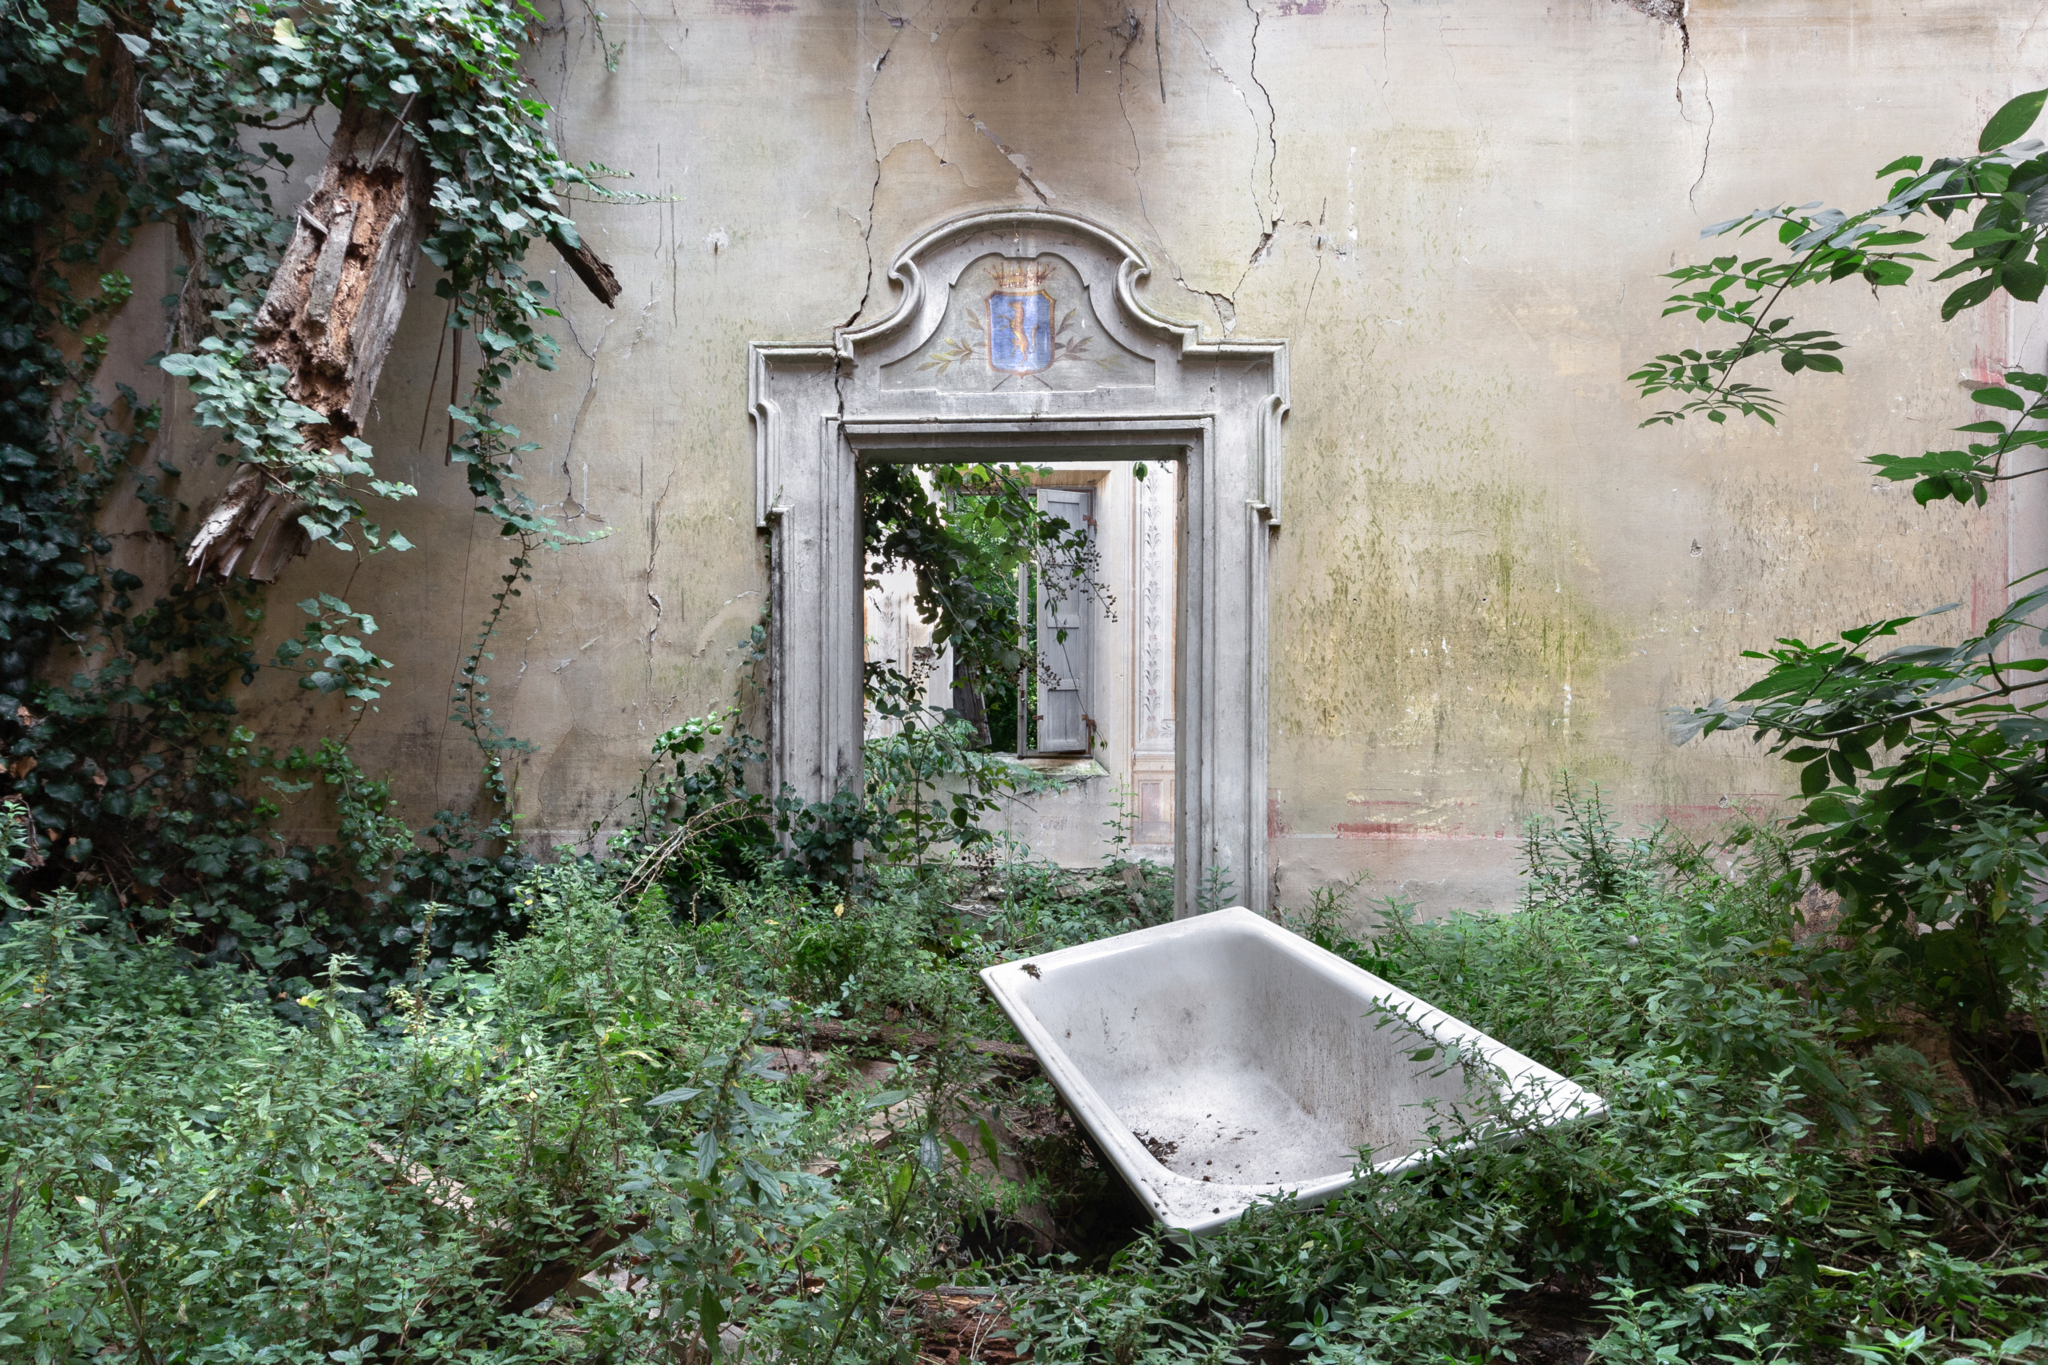 Queen's Garden - Abandoned villa, Italy